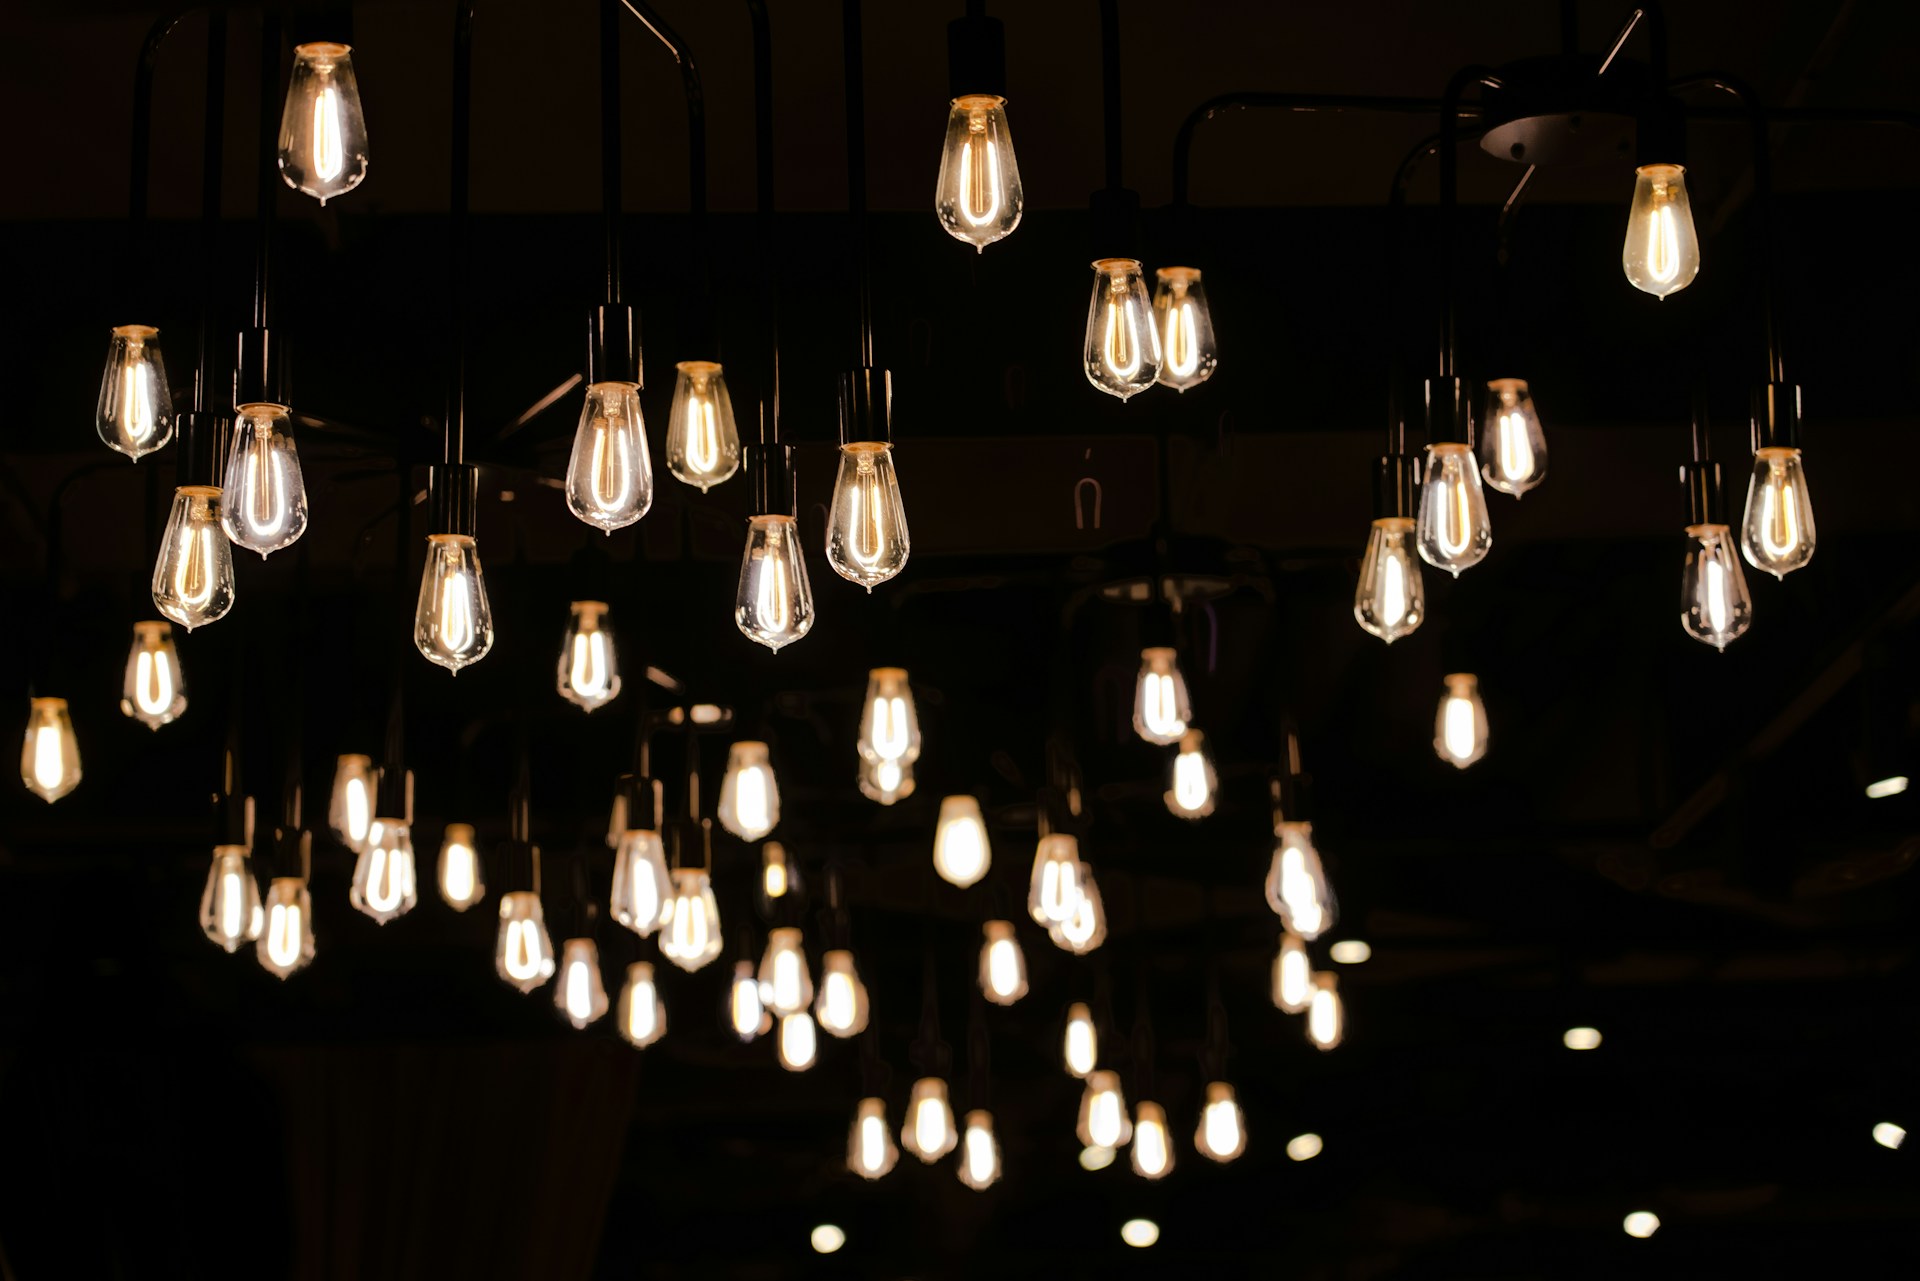 Light bulbs, glowing on a dark background. Photo by Juan Carlos Becerra on Unsplash.